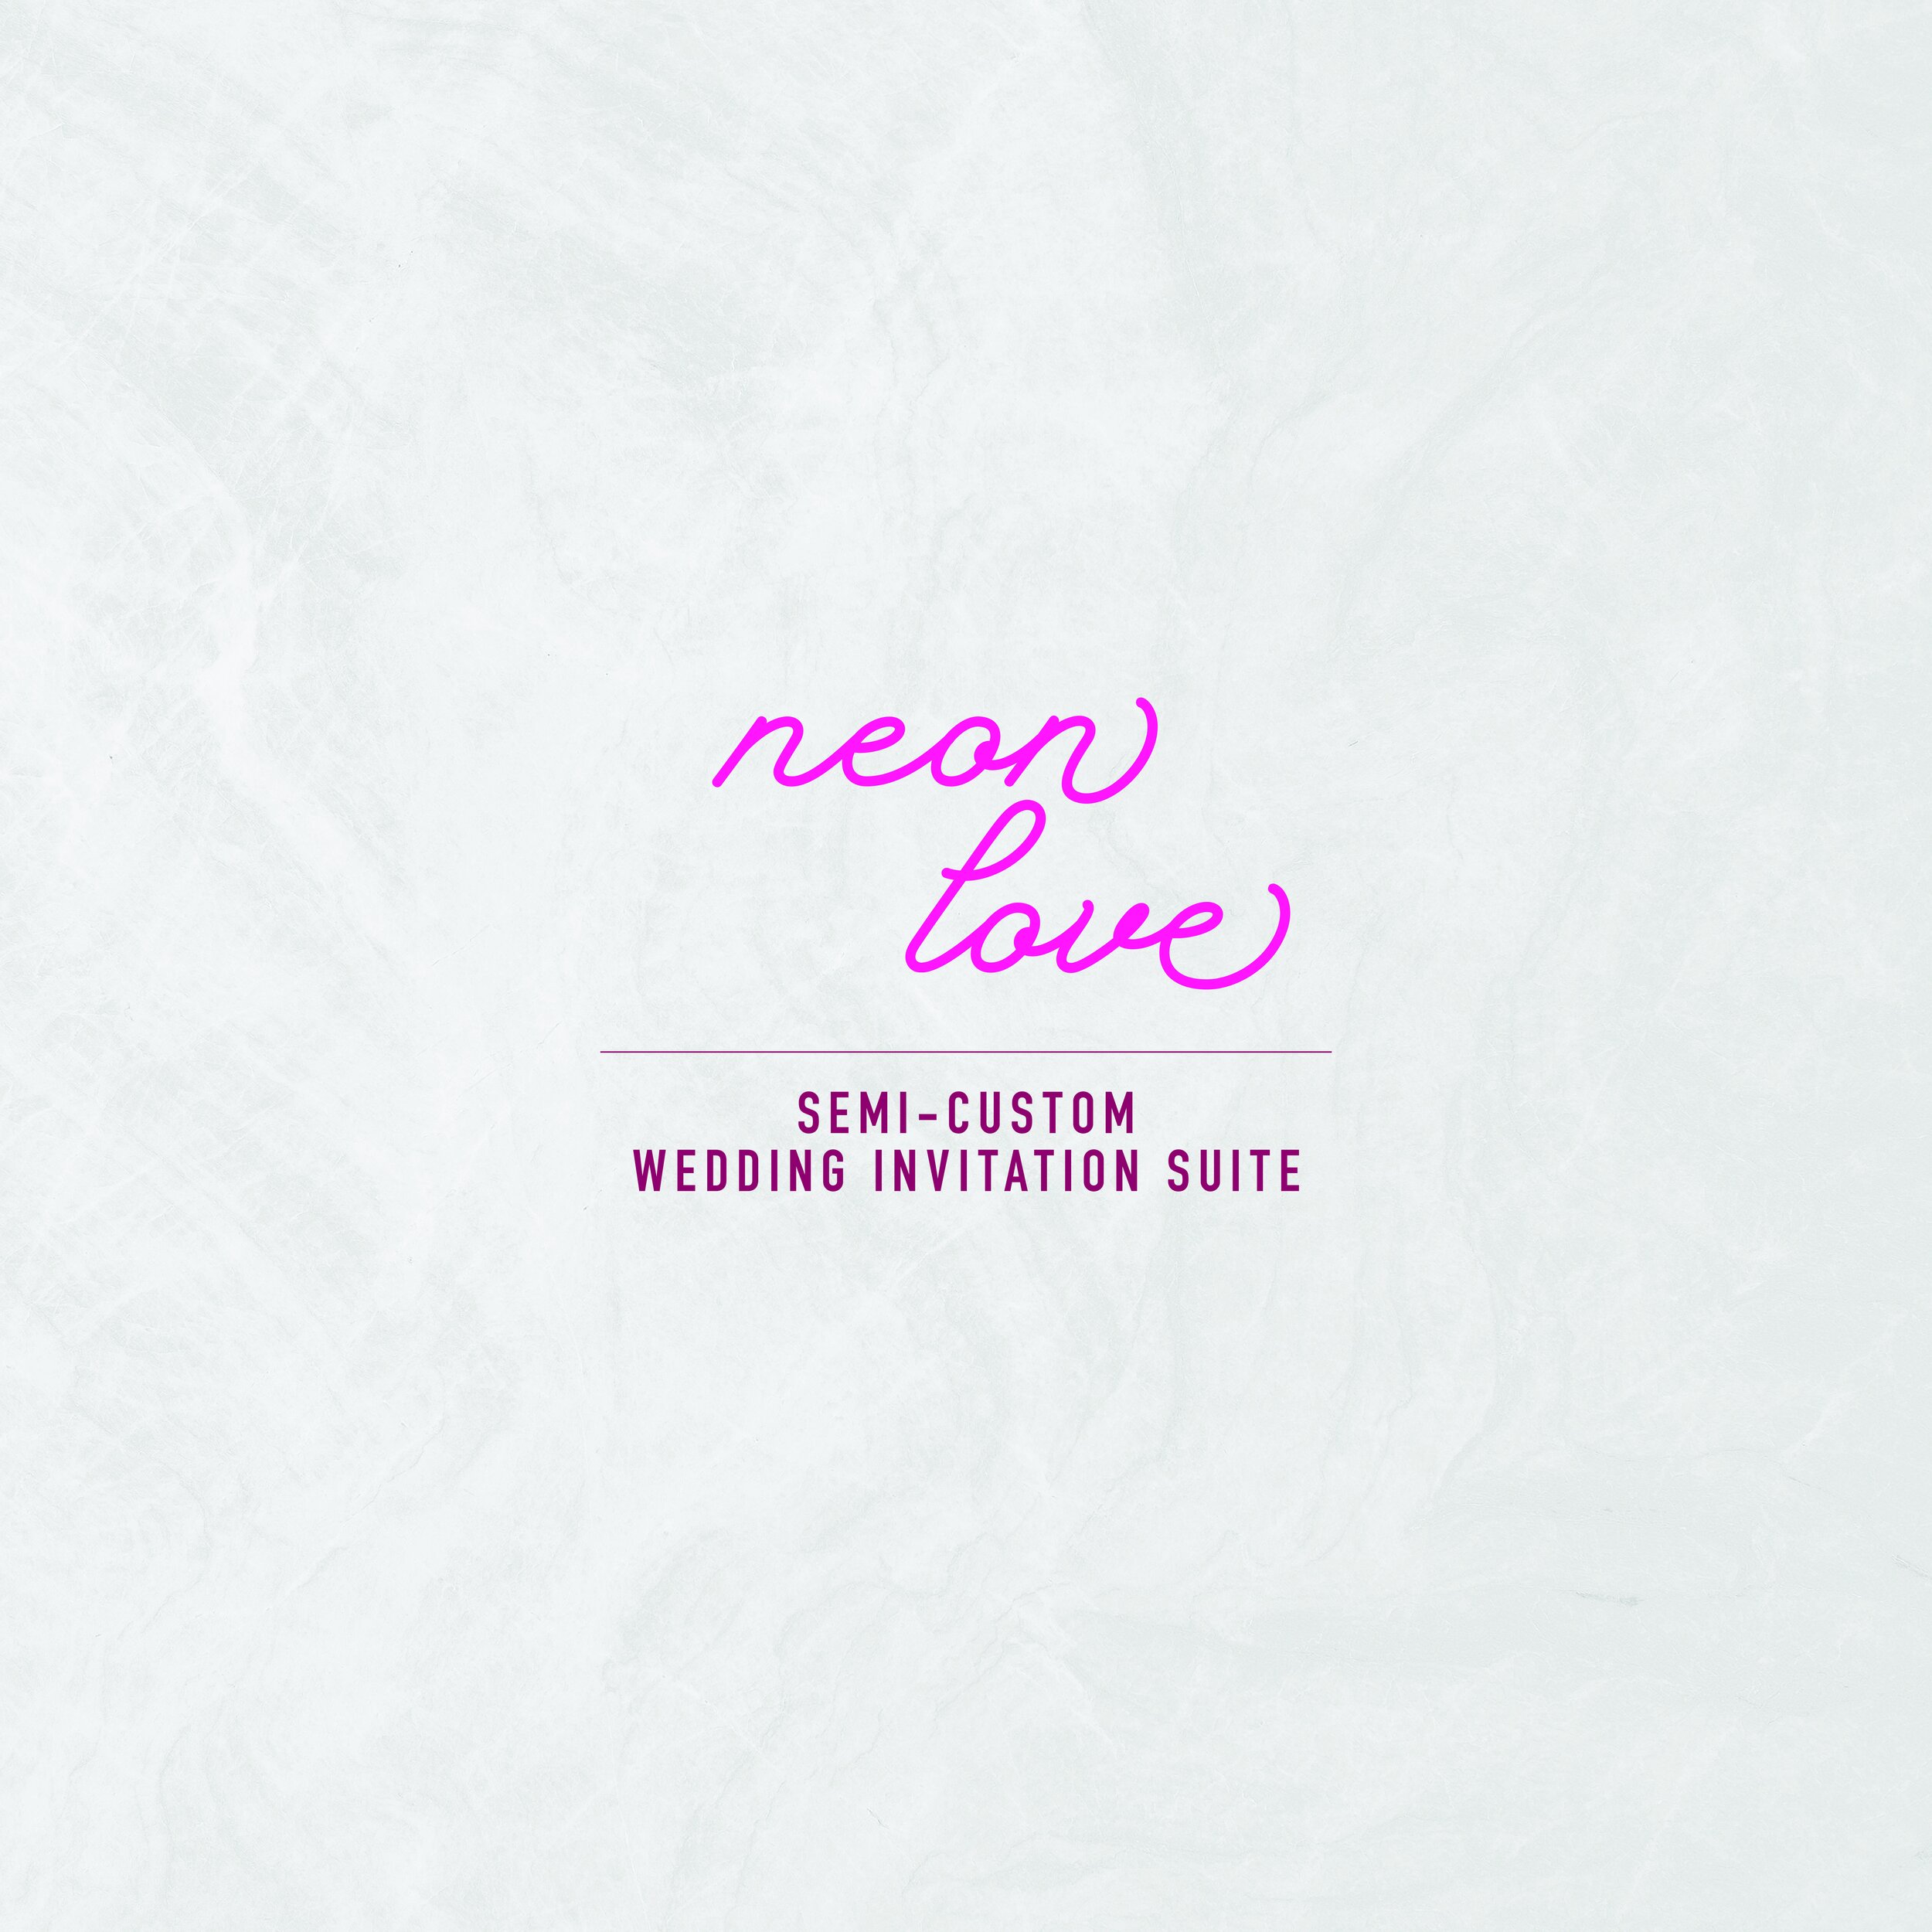 NeonLoveLove-Mockup.jpg